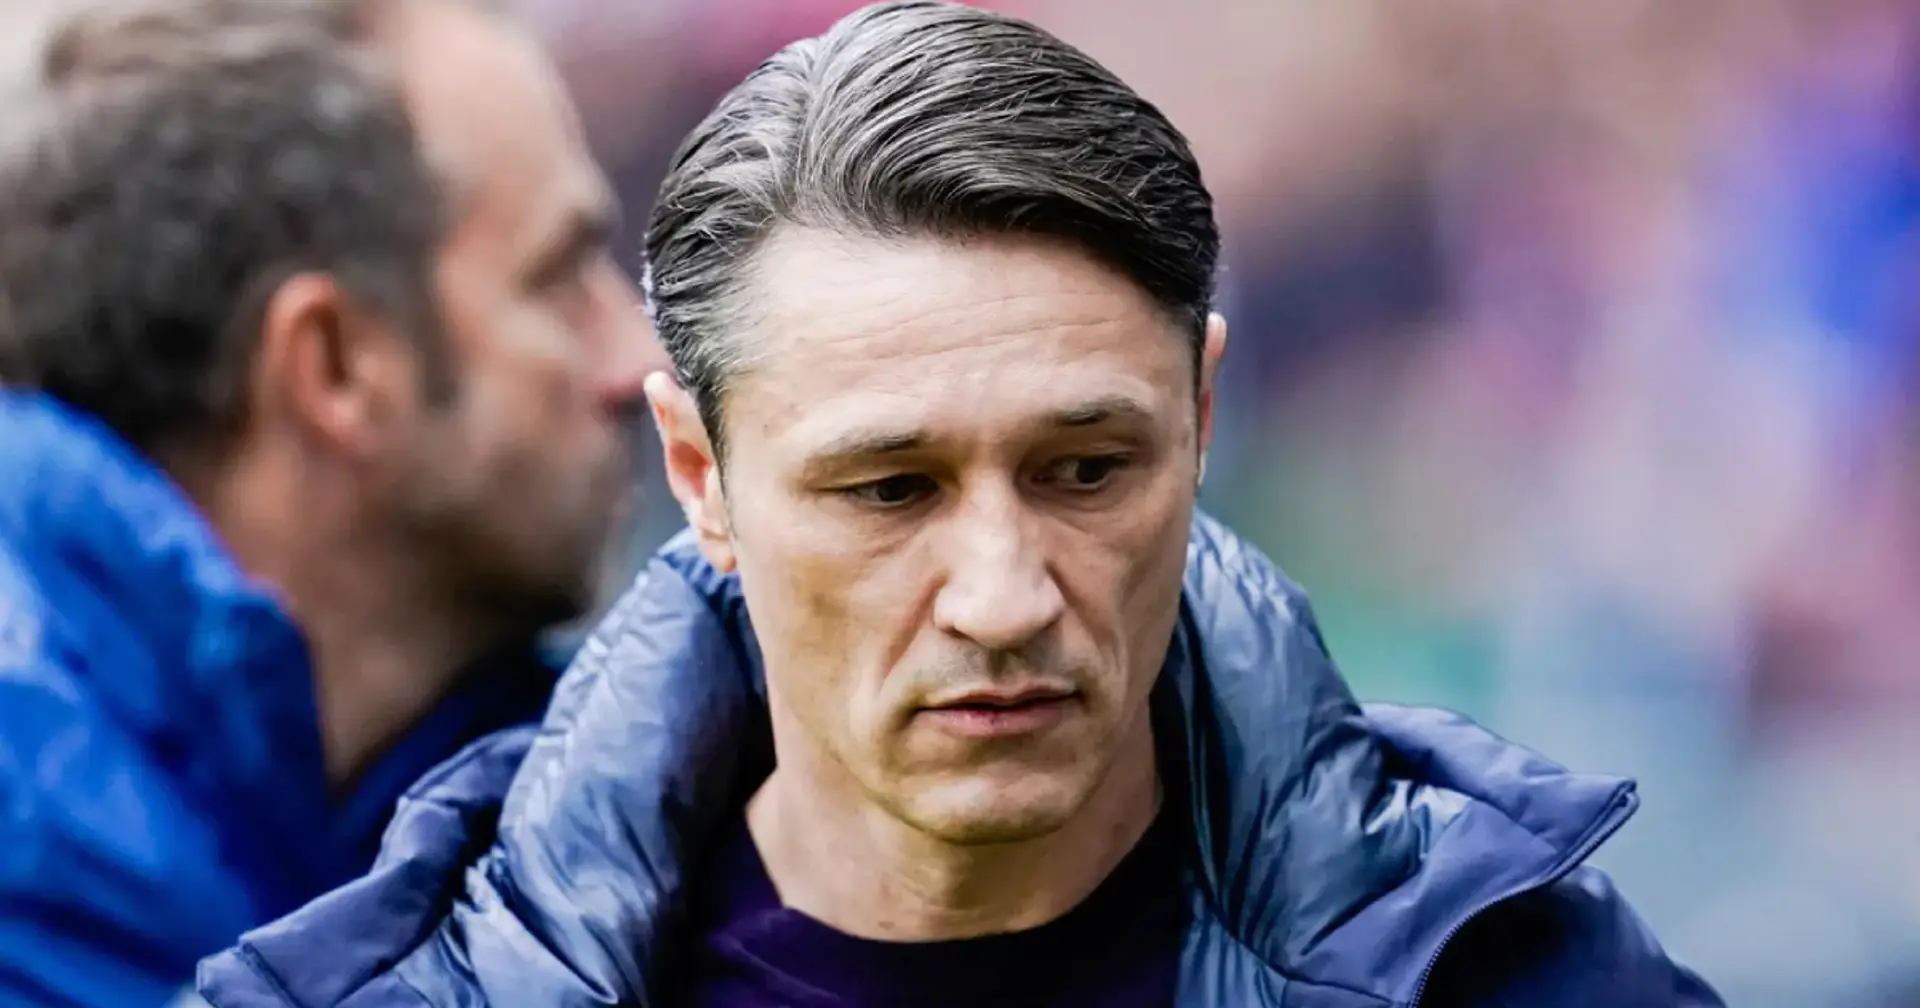 'His agents have spoken to Liverpool': German source clarifies Niko Kovac links 